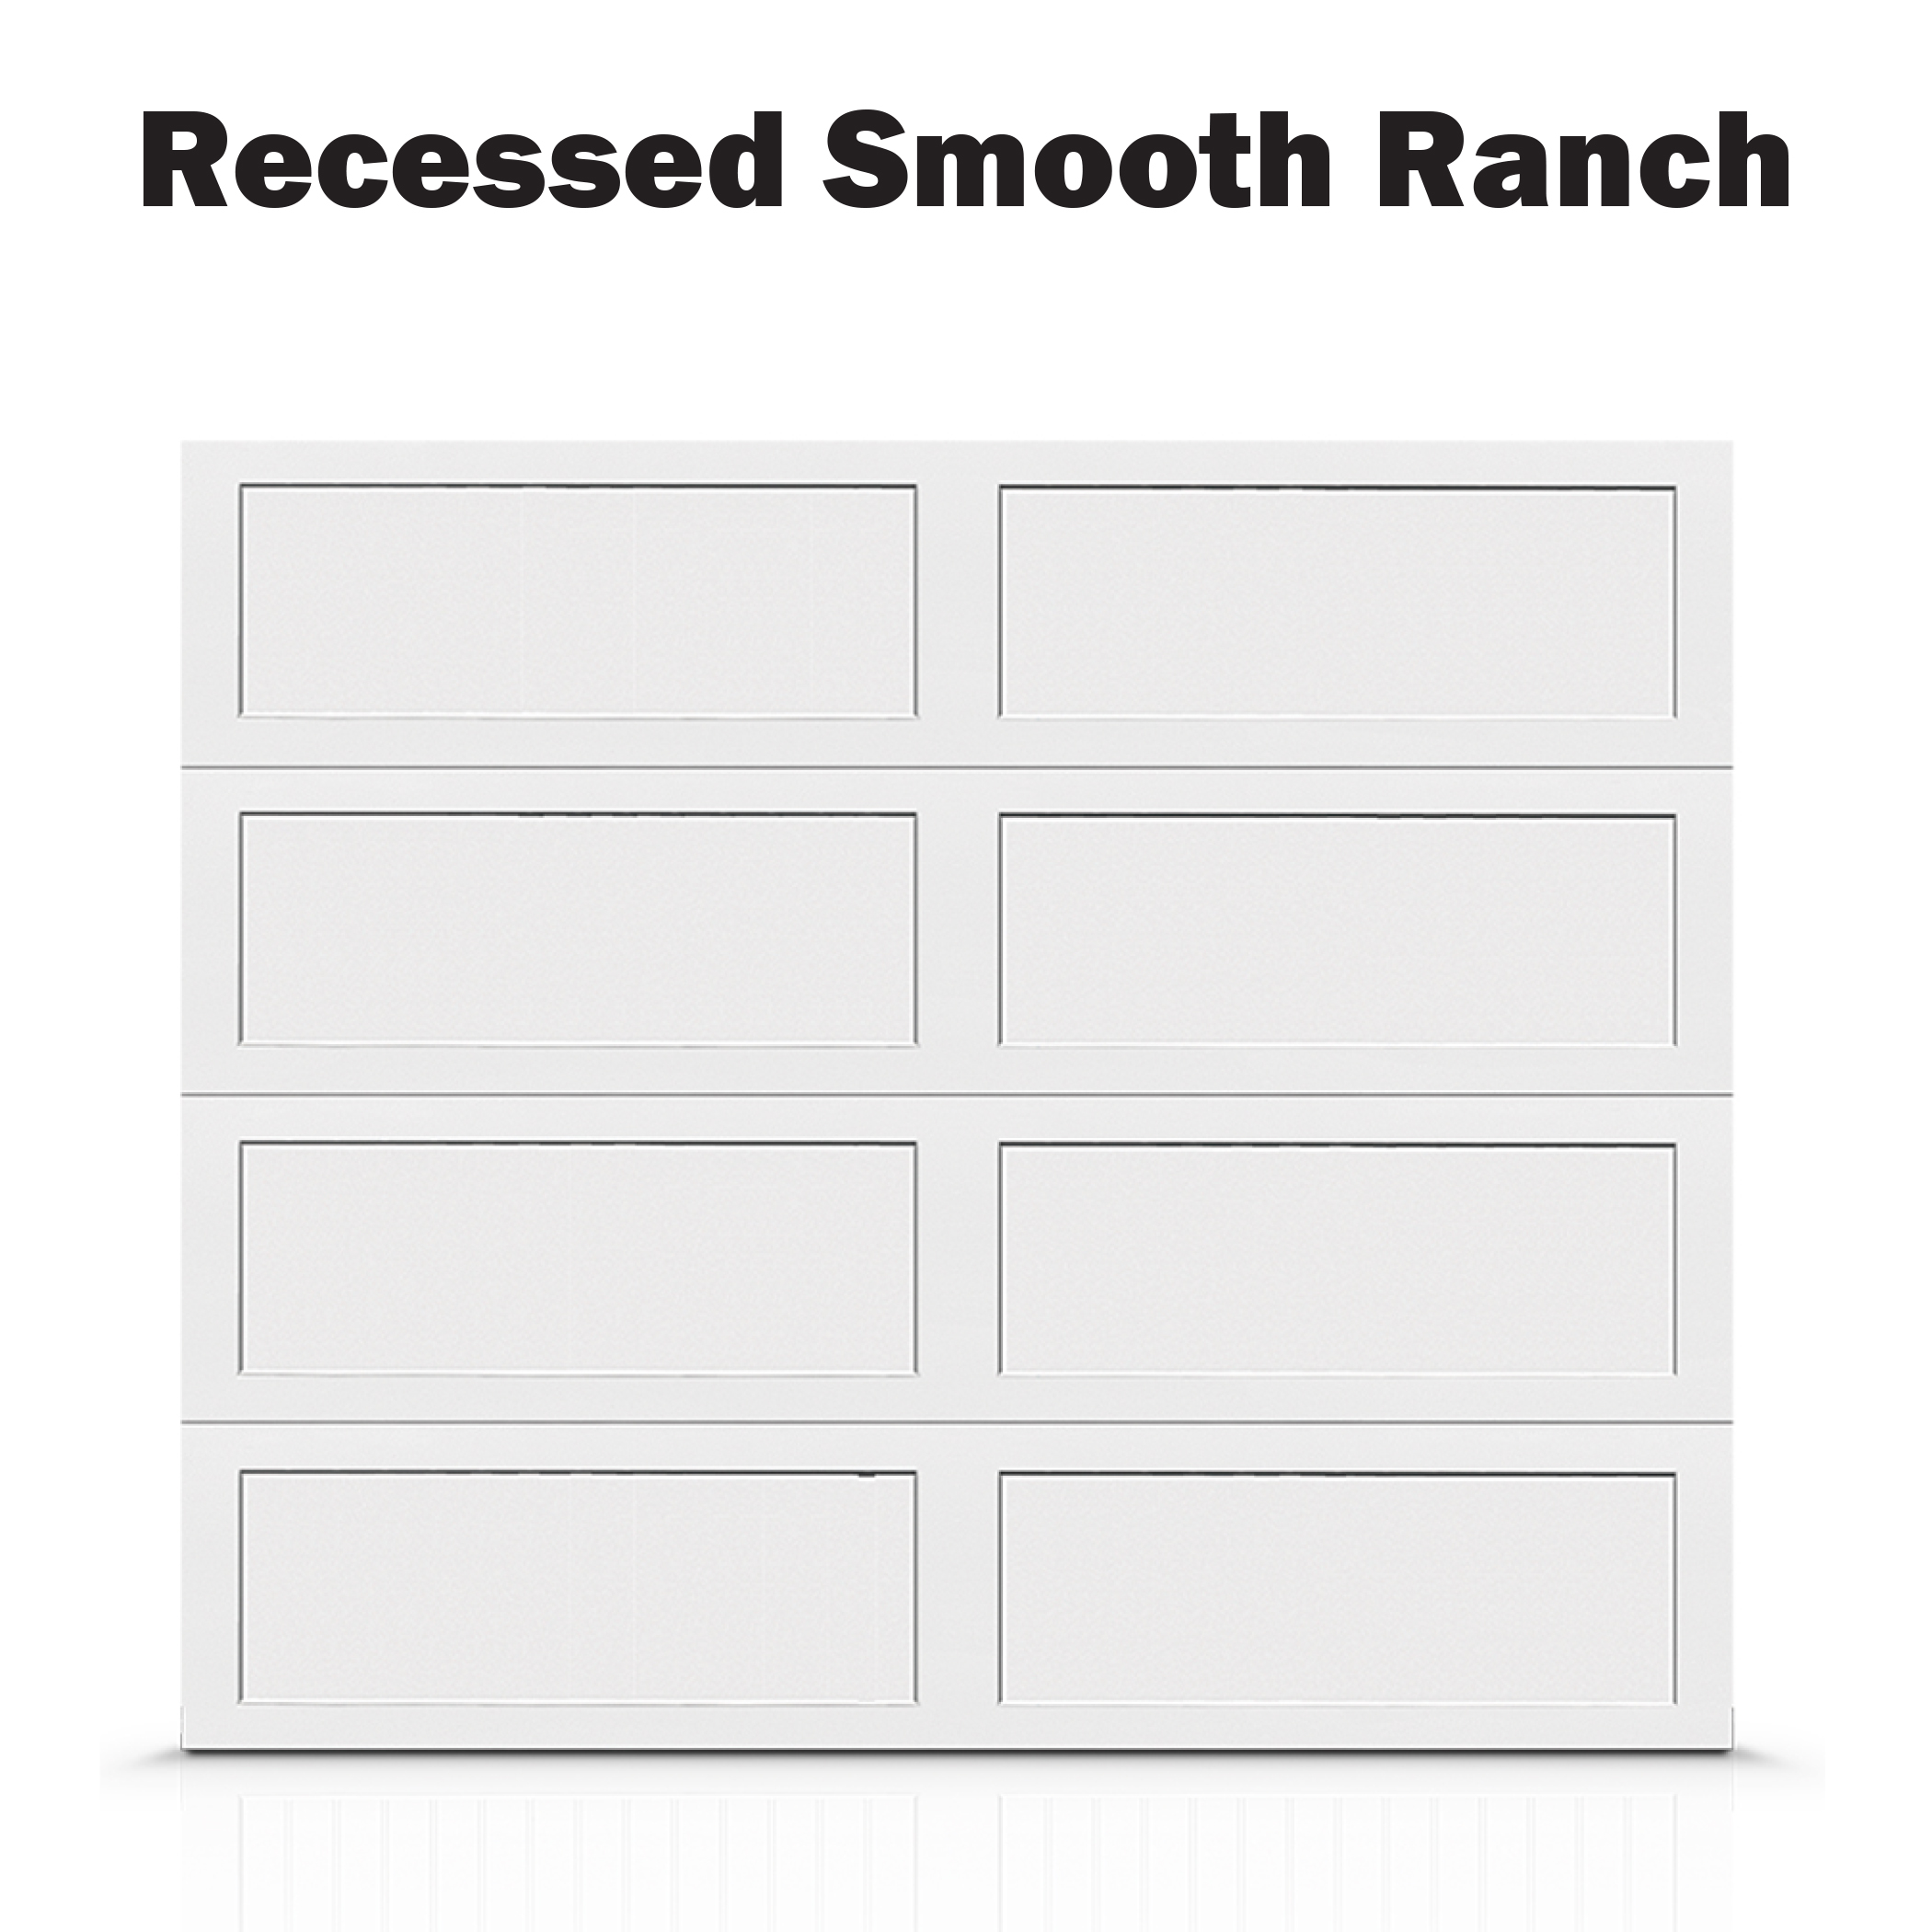 Recessed Smooth Ranch - Premium.jpg